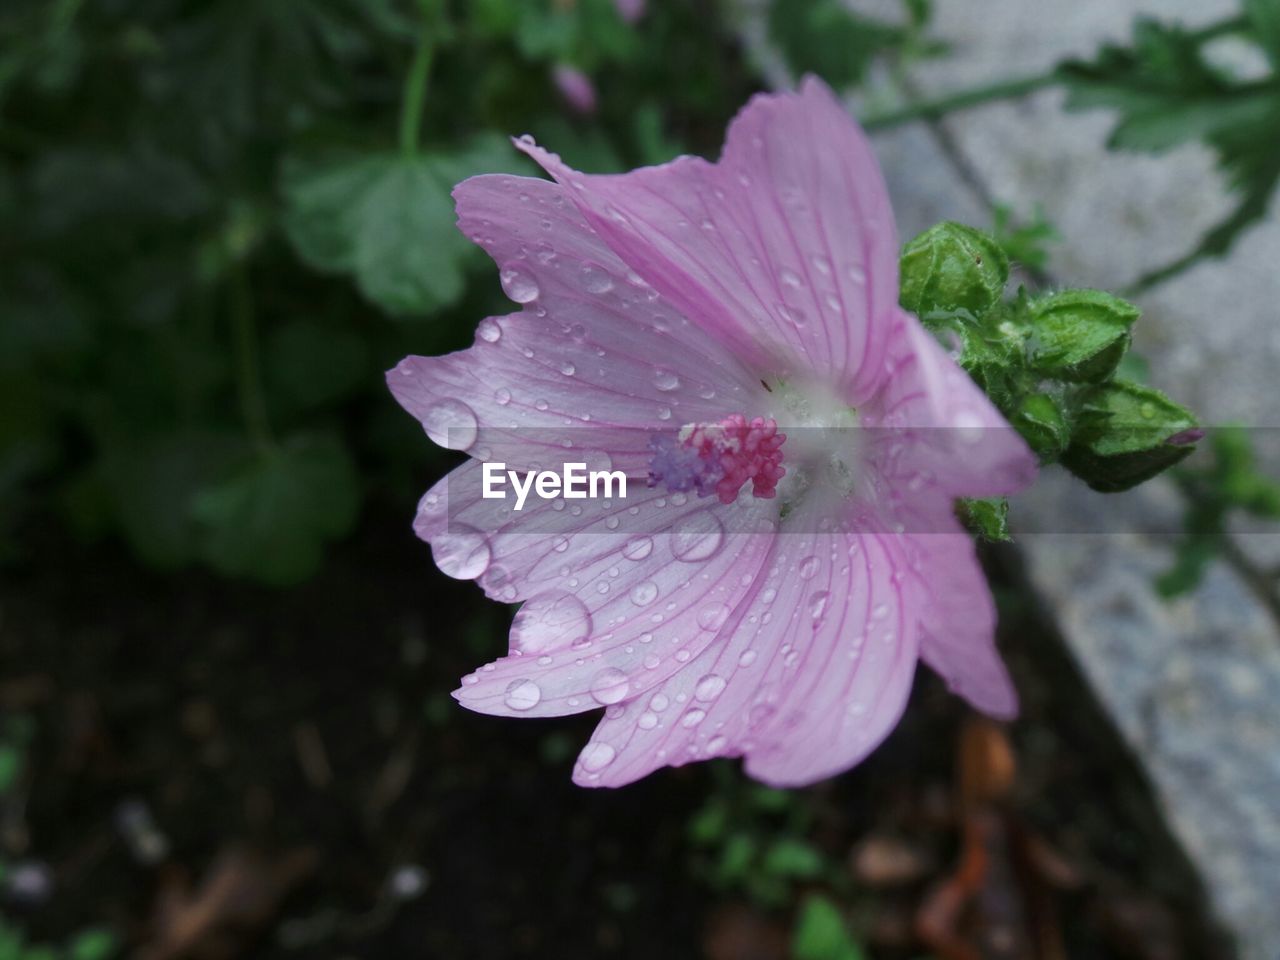 Dew drops on pink flower in garden